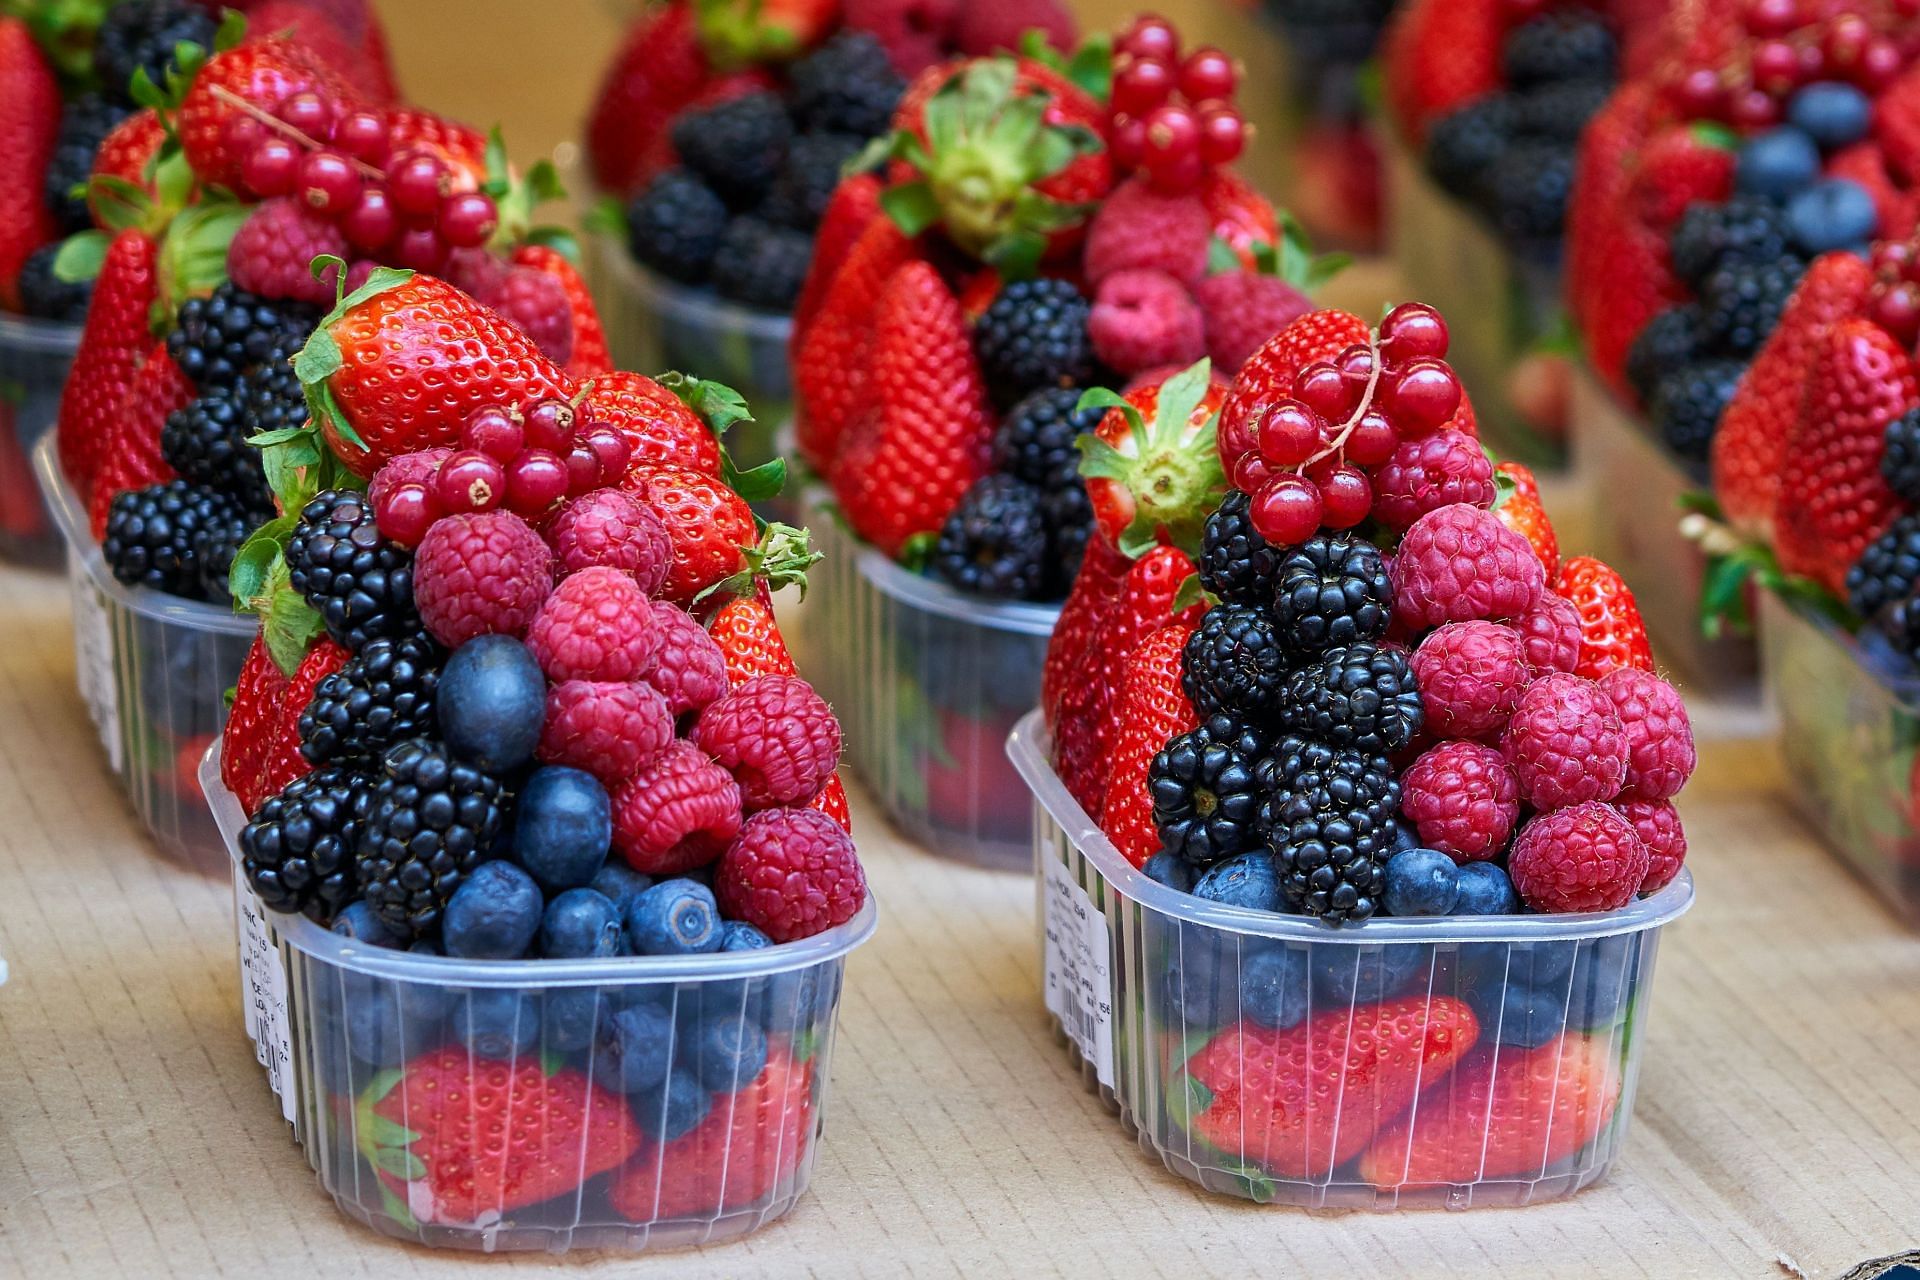 Berries are superfoods. (Image via Unsplash/Timo Volz)